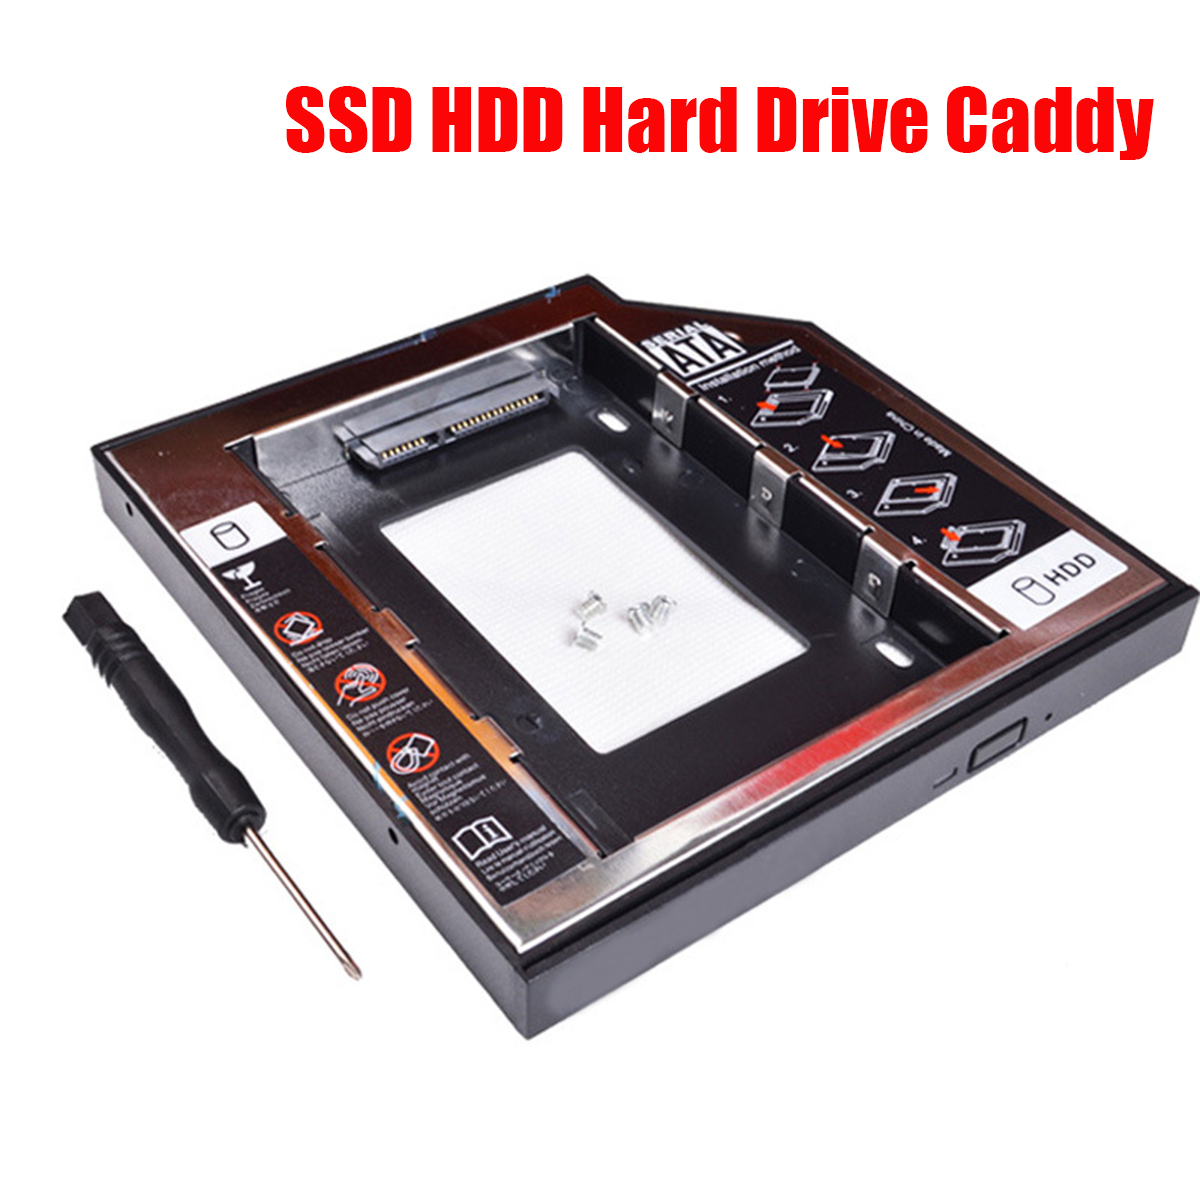 2nd-HDD-SSD-Hard-Drive-Caddy-for-IBM-Lenovo-Thinkpad-T430-T430i-W530-T530-T530i-1236982